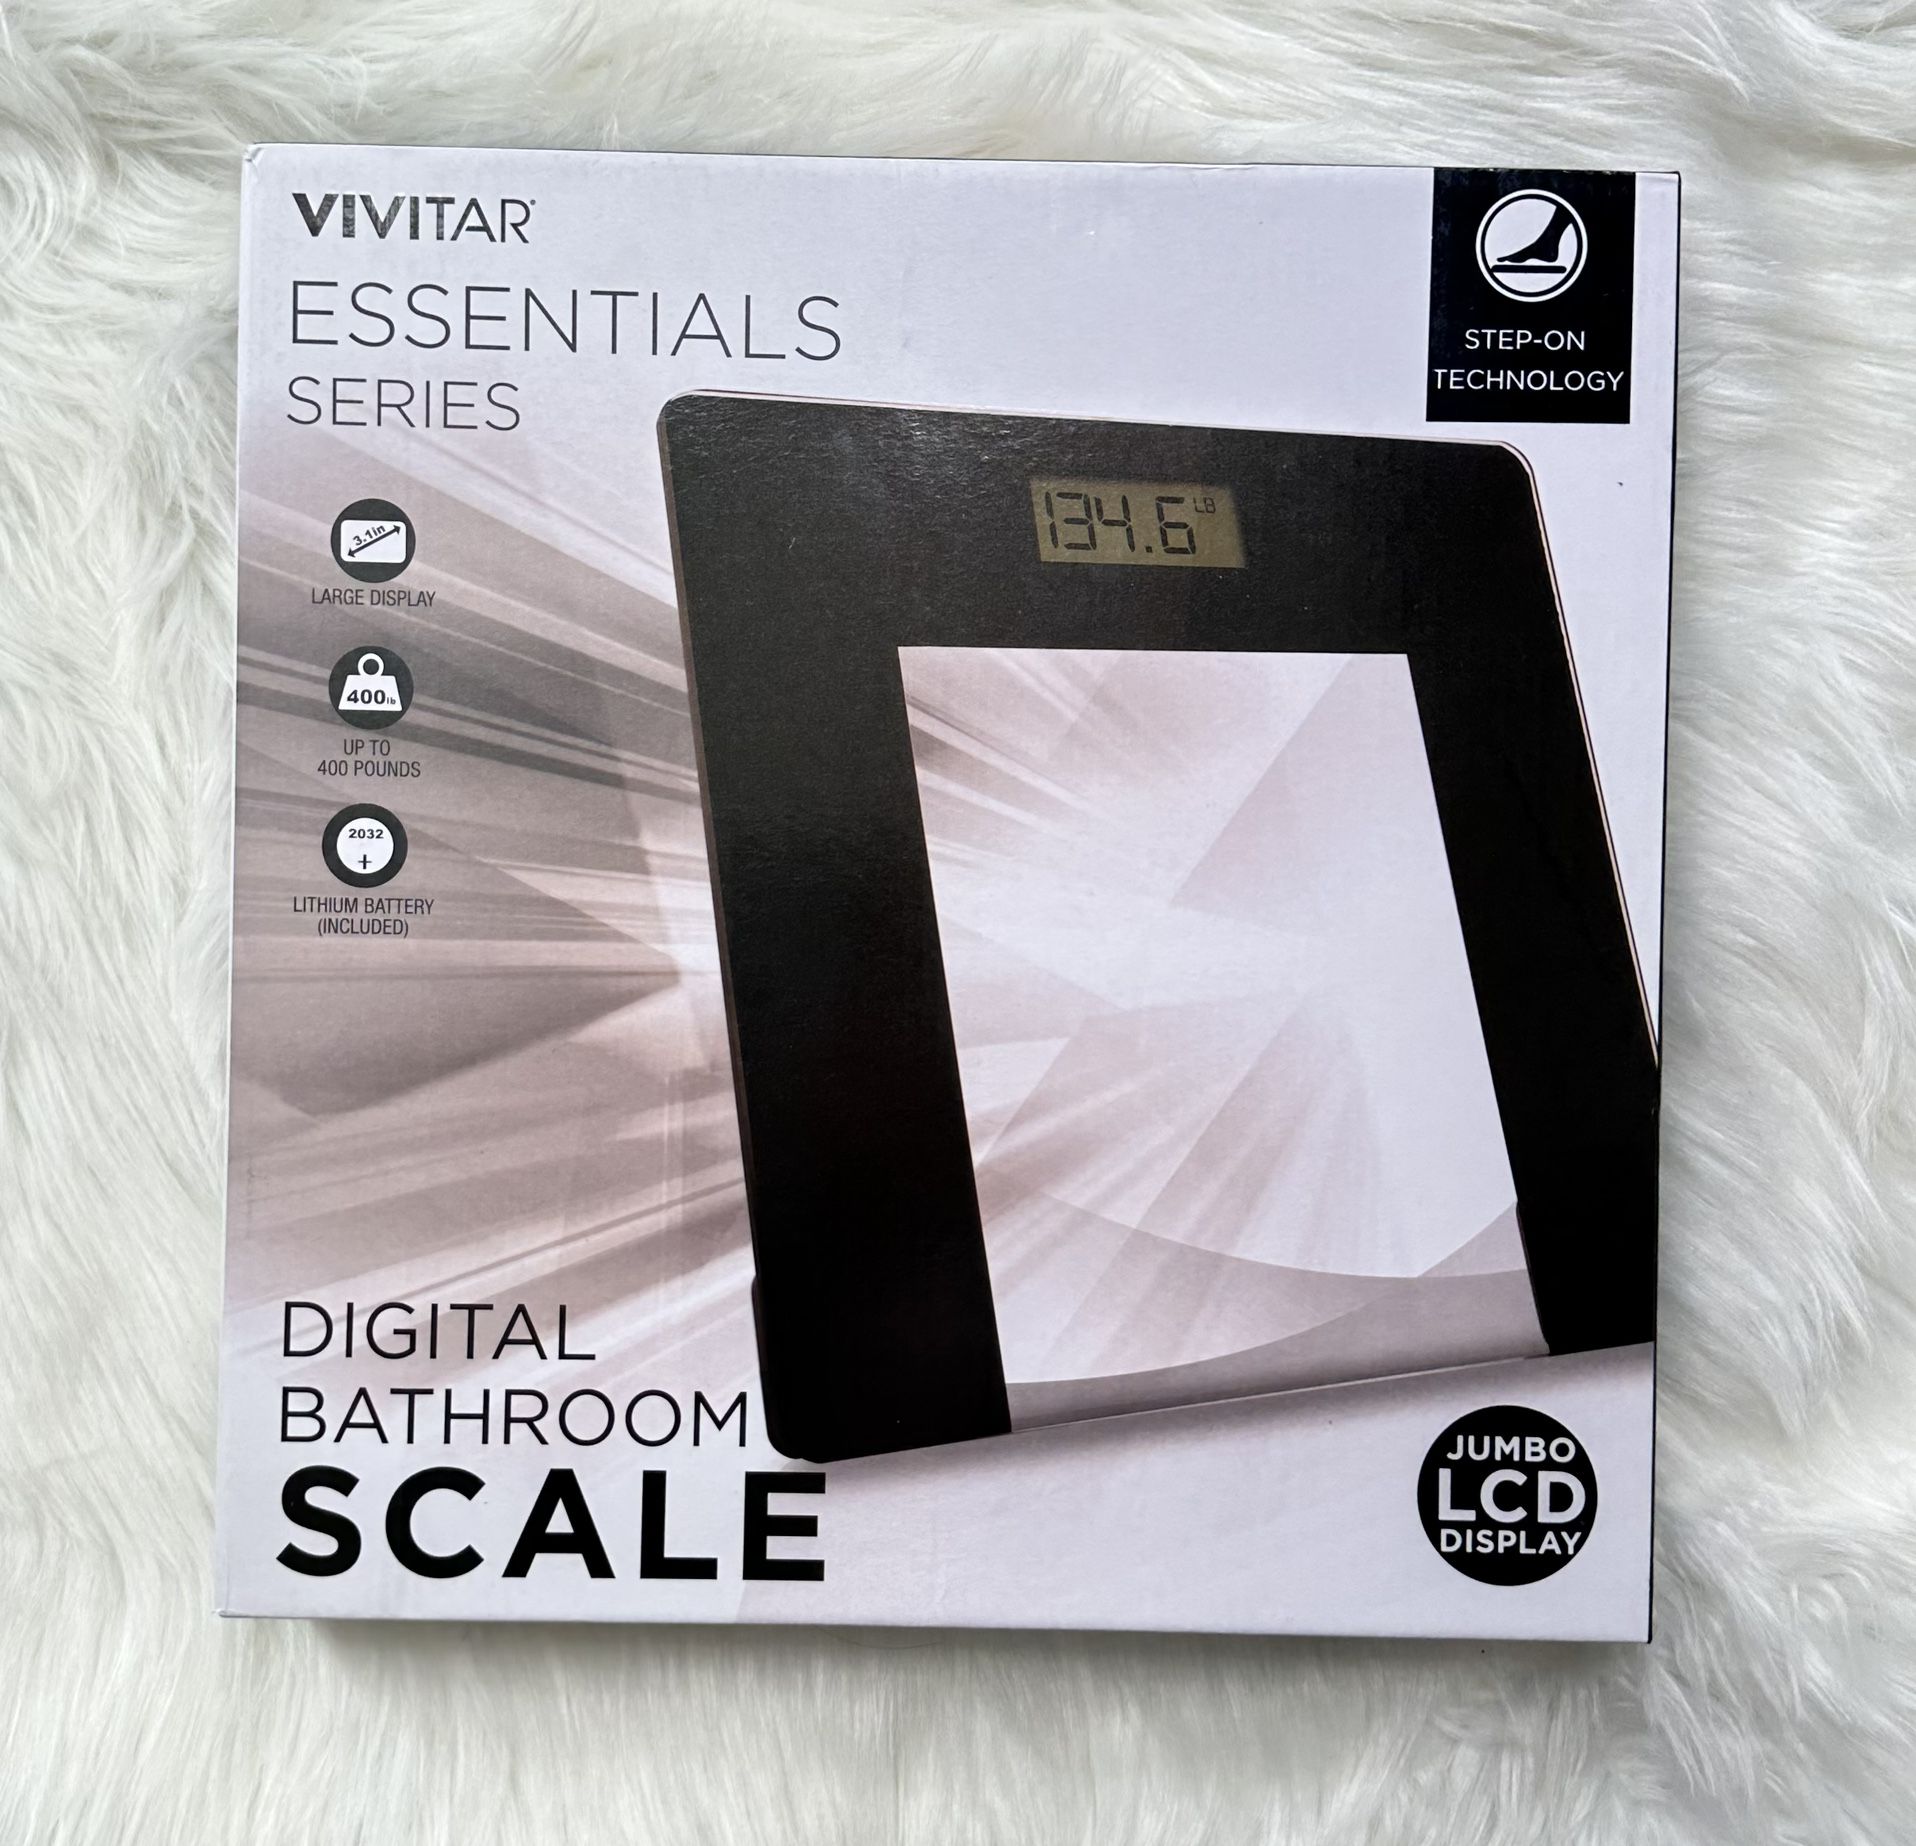 Vivitar Digital Bathroom Scale, Essentials Series, Jumbo LCD Display, 400 lb.